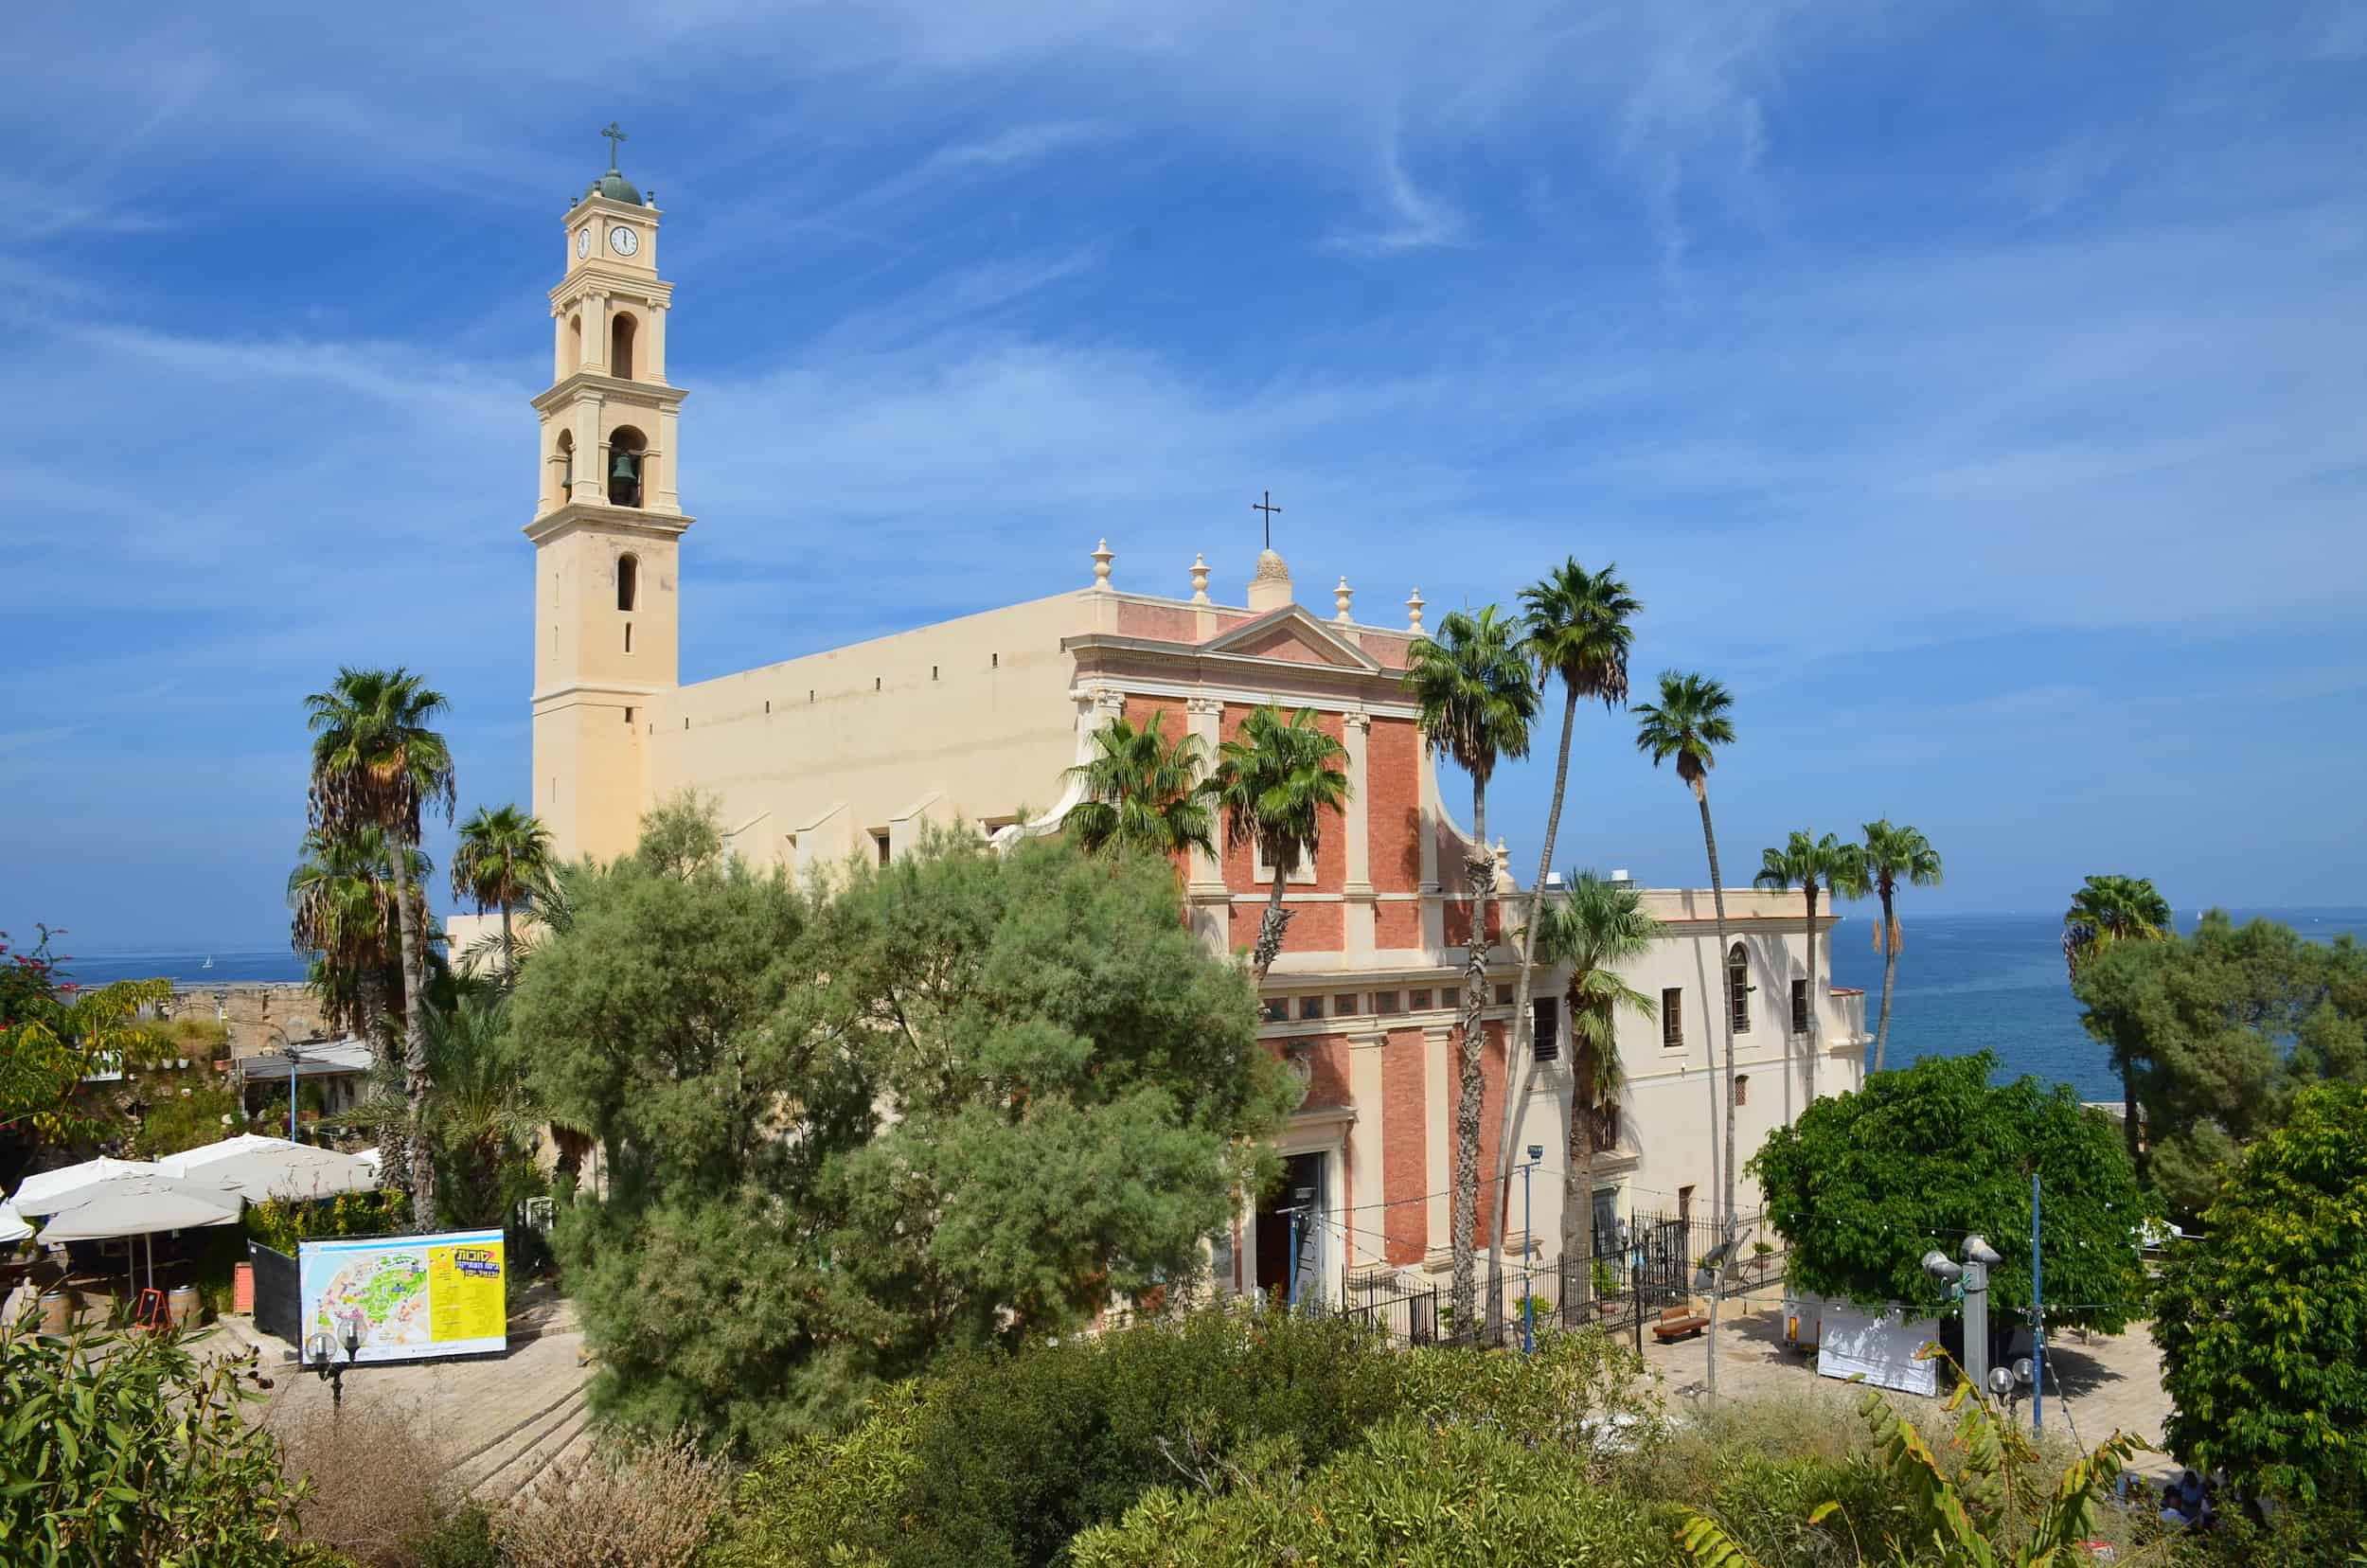 St. Peter's Church in Old Jaffa, Tel Aviv, Israel